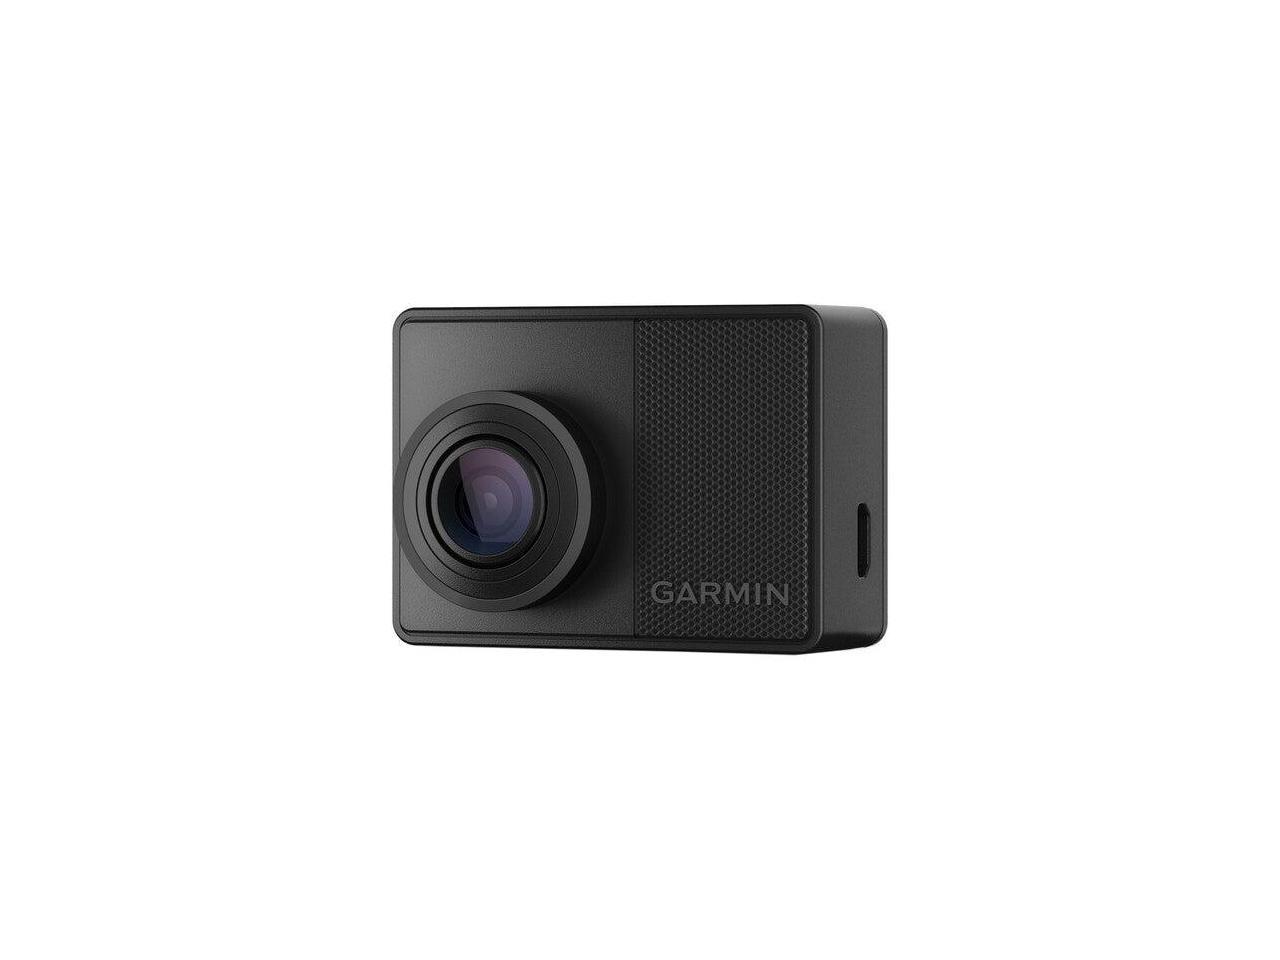 Garmin 67W 1440p Dash Cam, Black #010-02505-05 - image 21 of 21